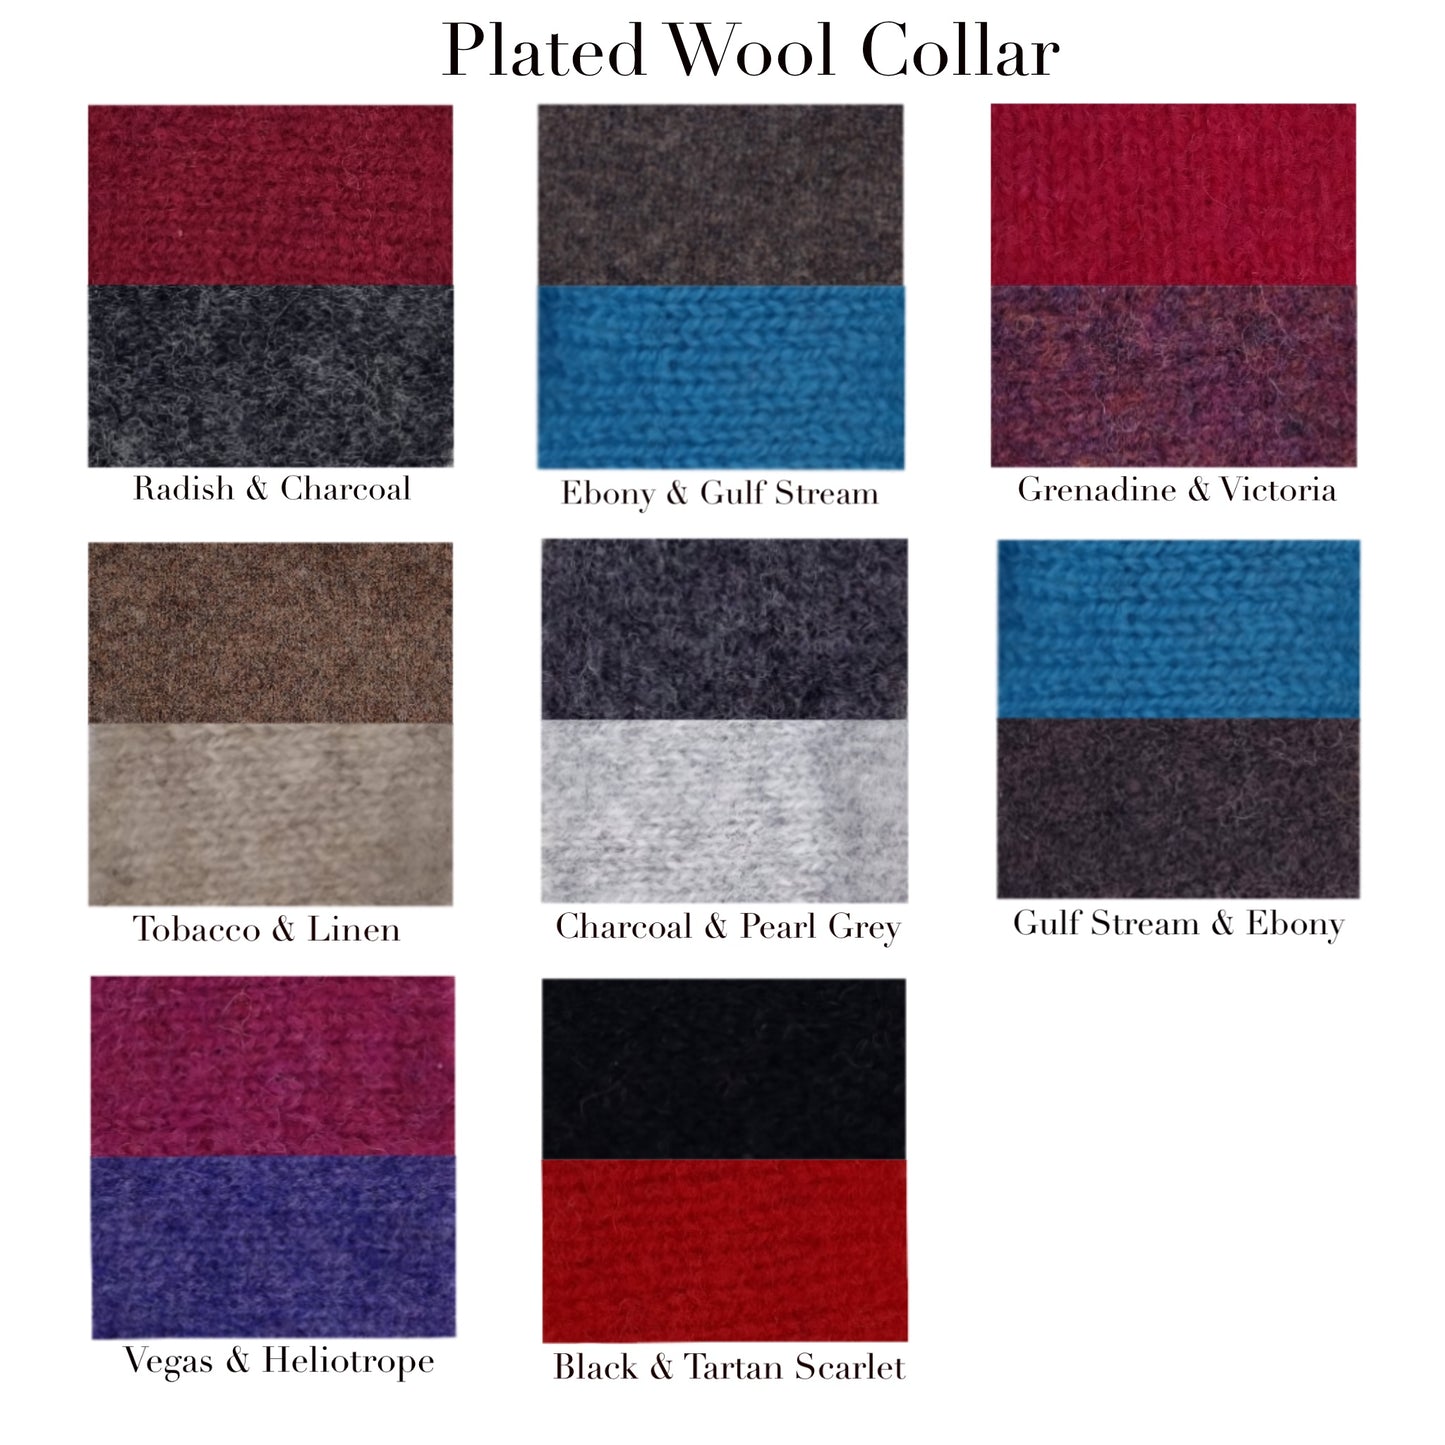 Plated Wool Collar